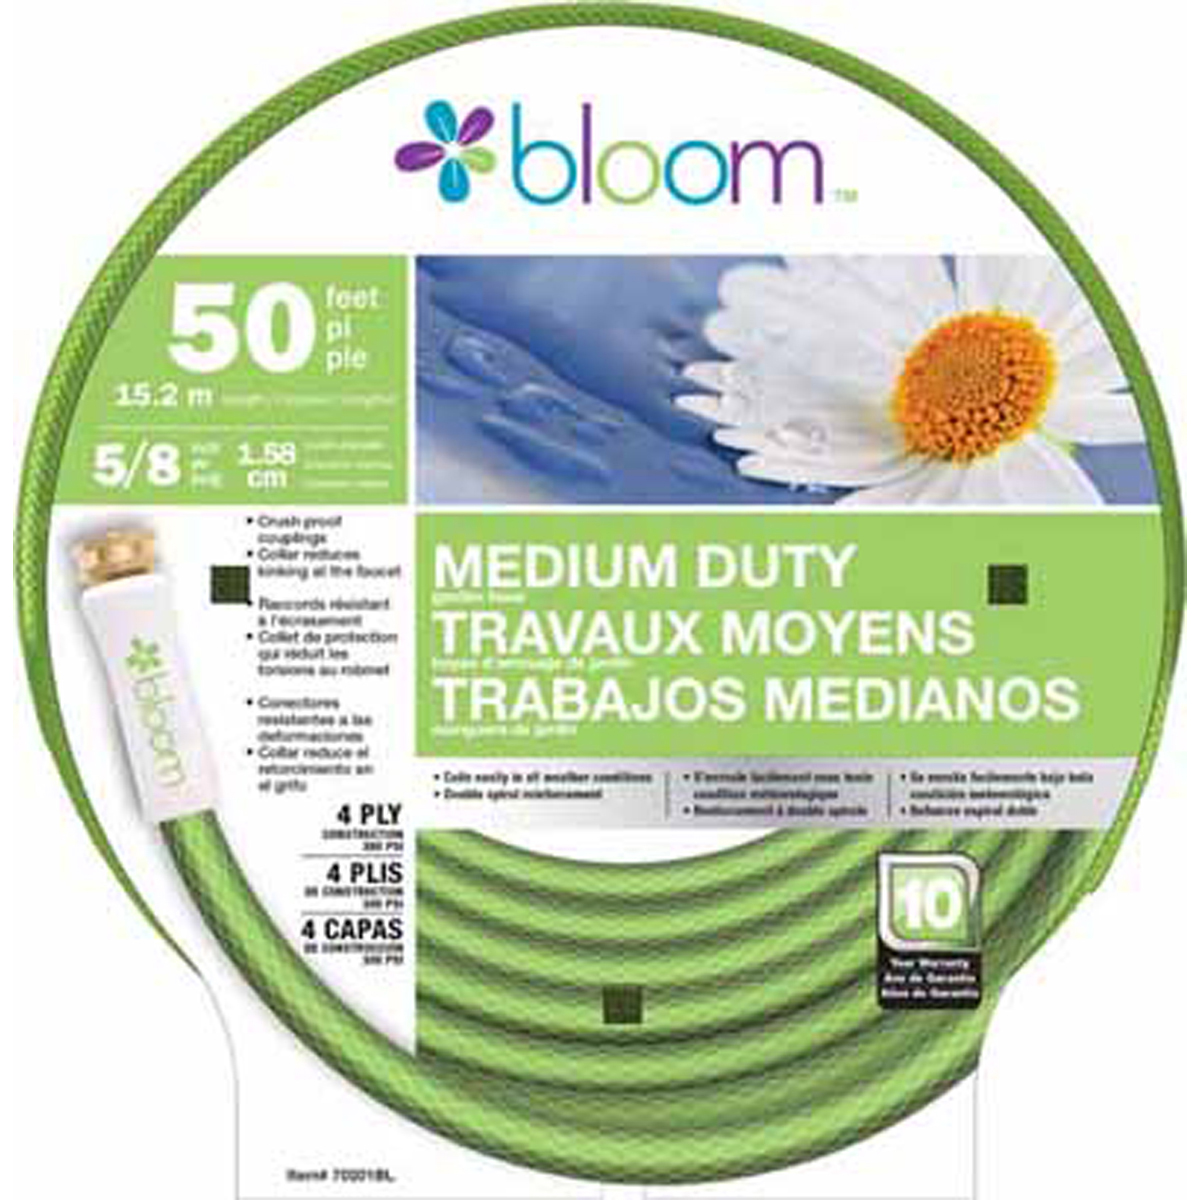 Image Thumbnail for Bloom 5/8" 50 Ft Med Duty Hose